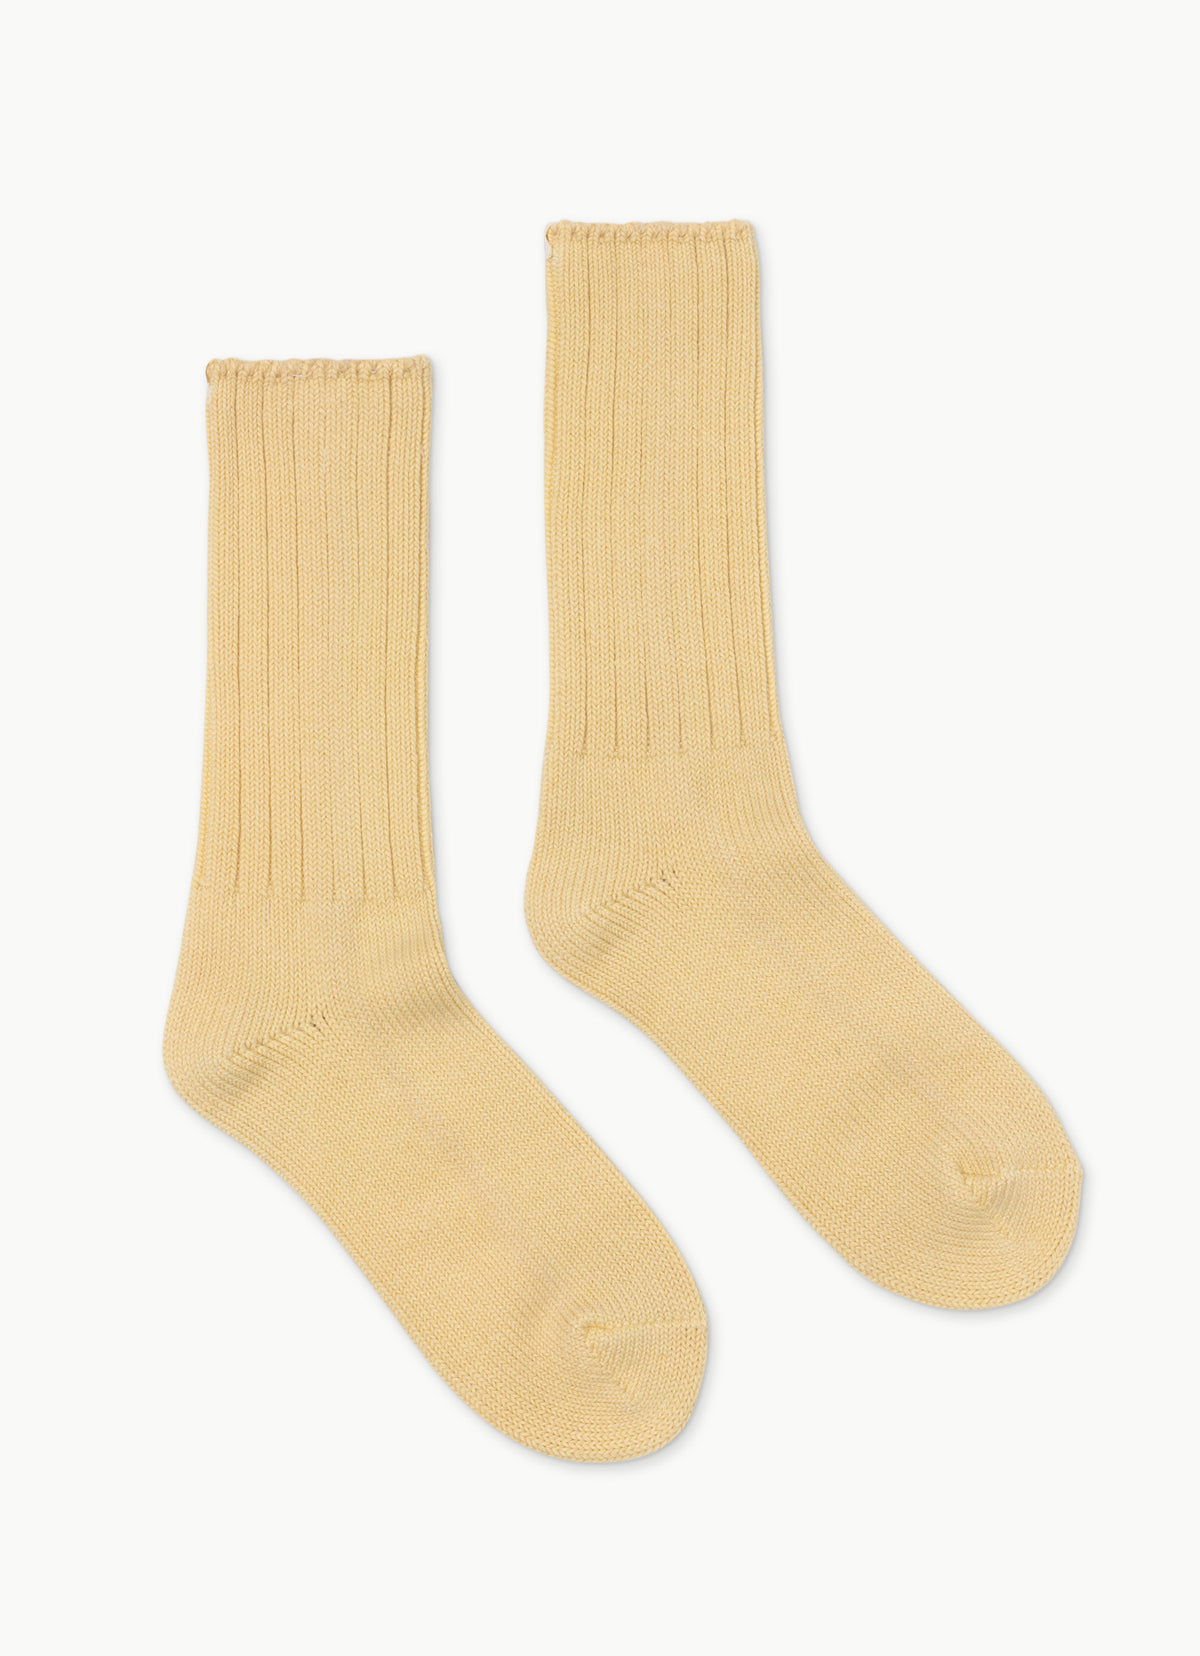 Bulky Rib ankle socks_dyed_Yellow